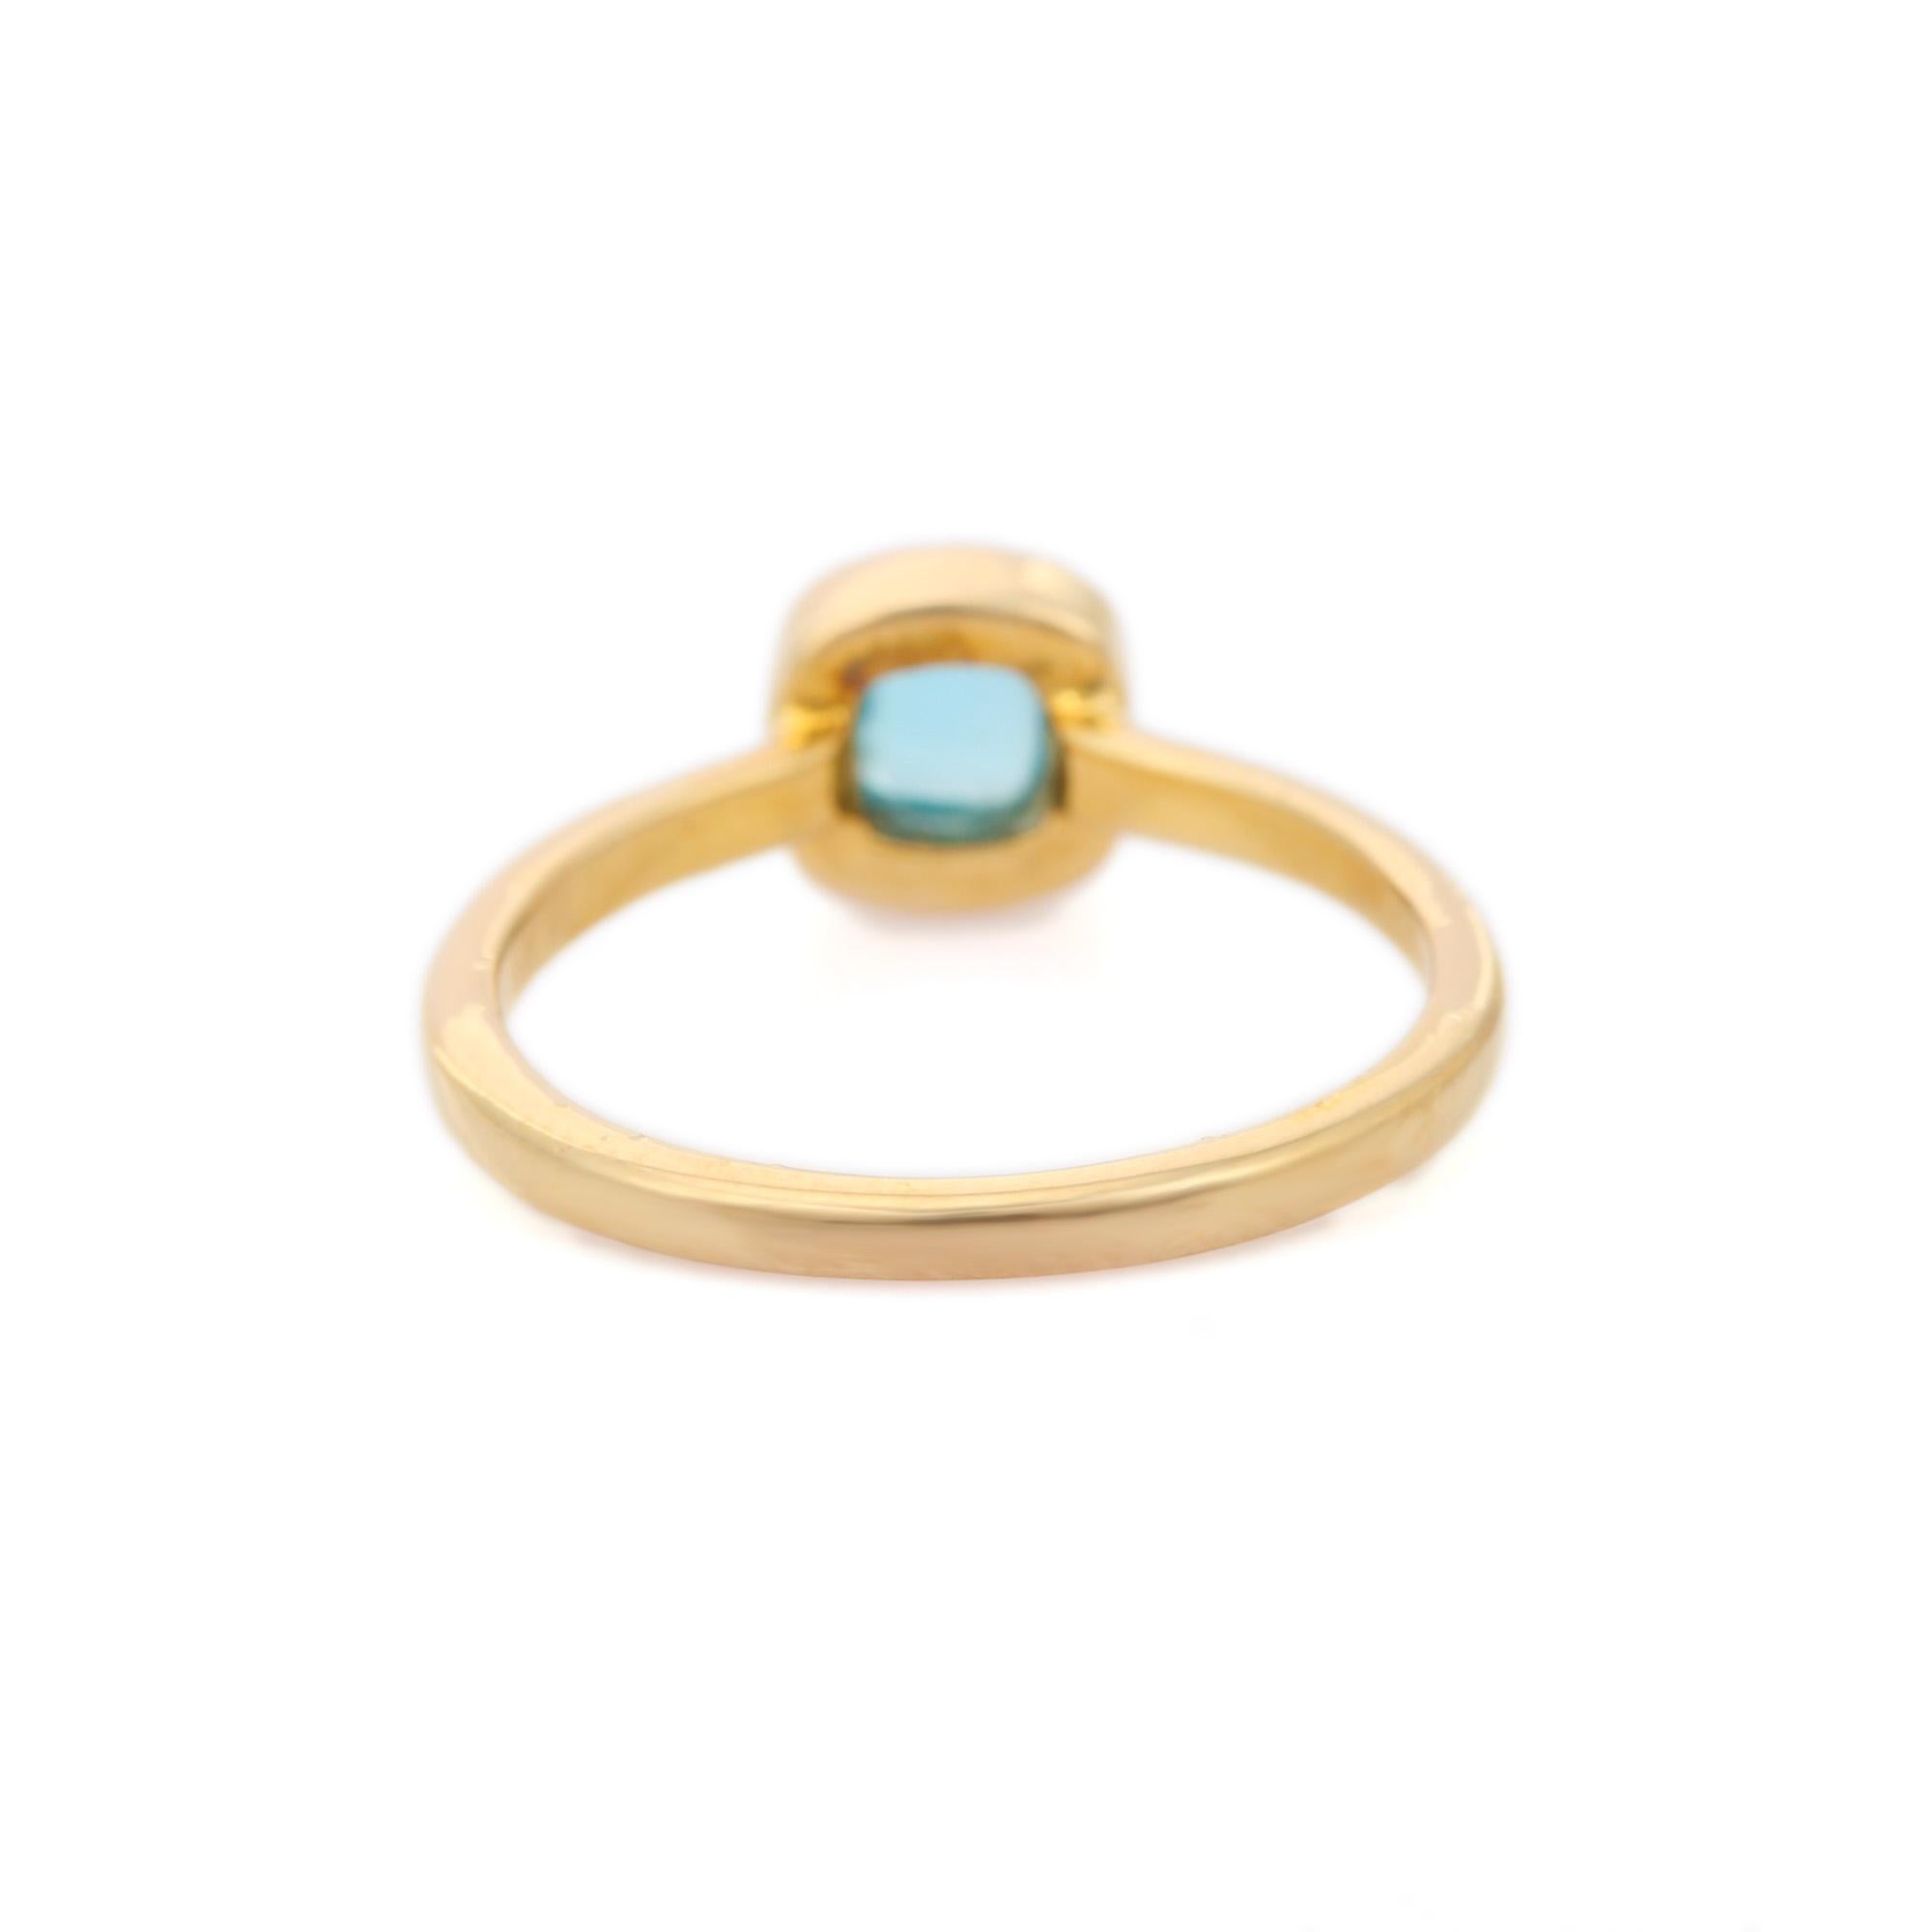 For Sale:  Cushion Cut Natural Aquamarine Gemstone Ring in 14K Yellow Gold 5